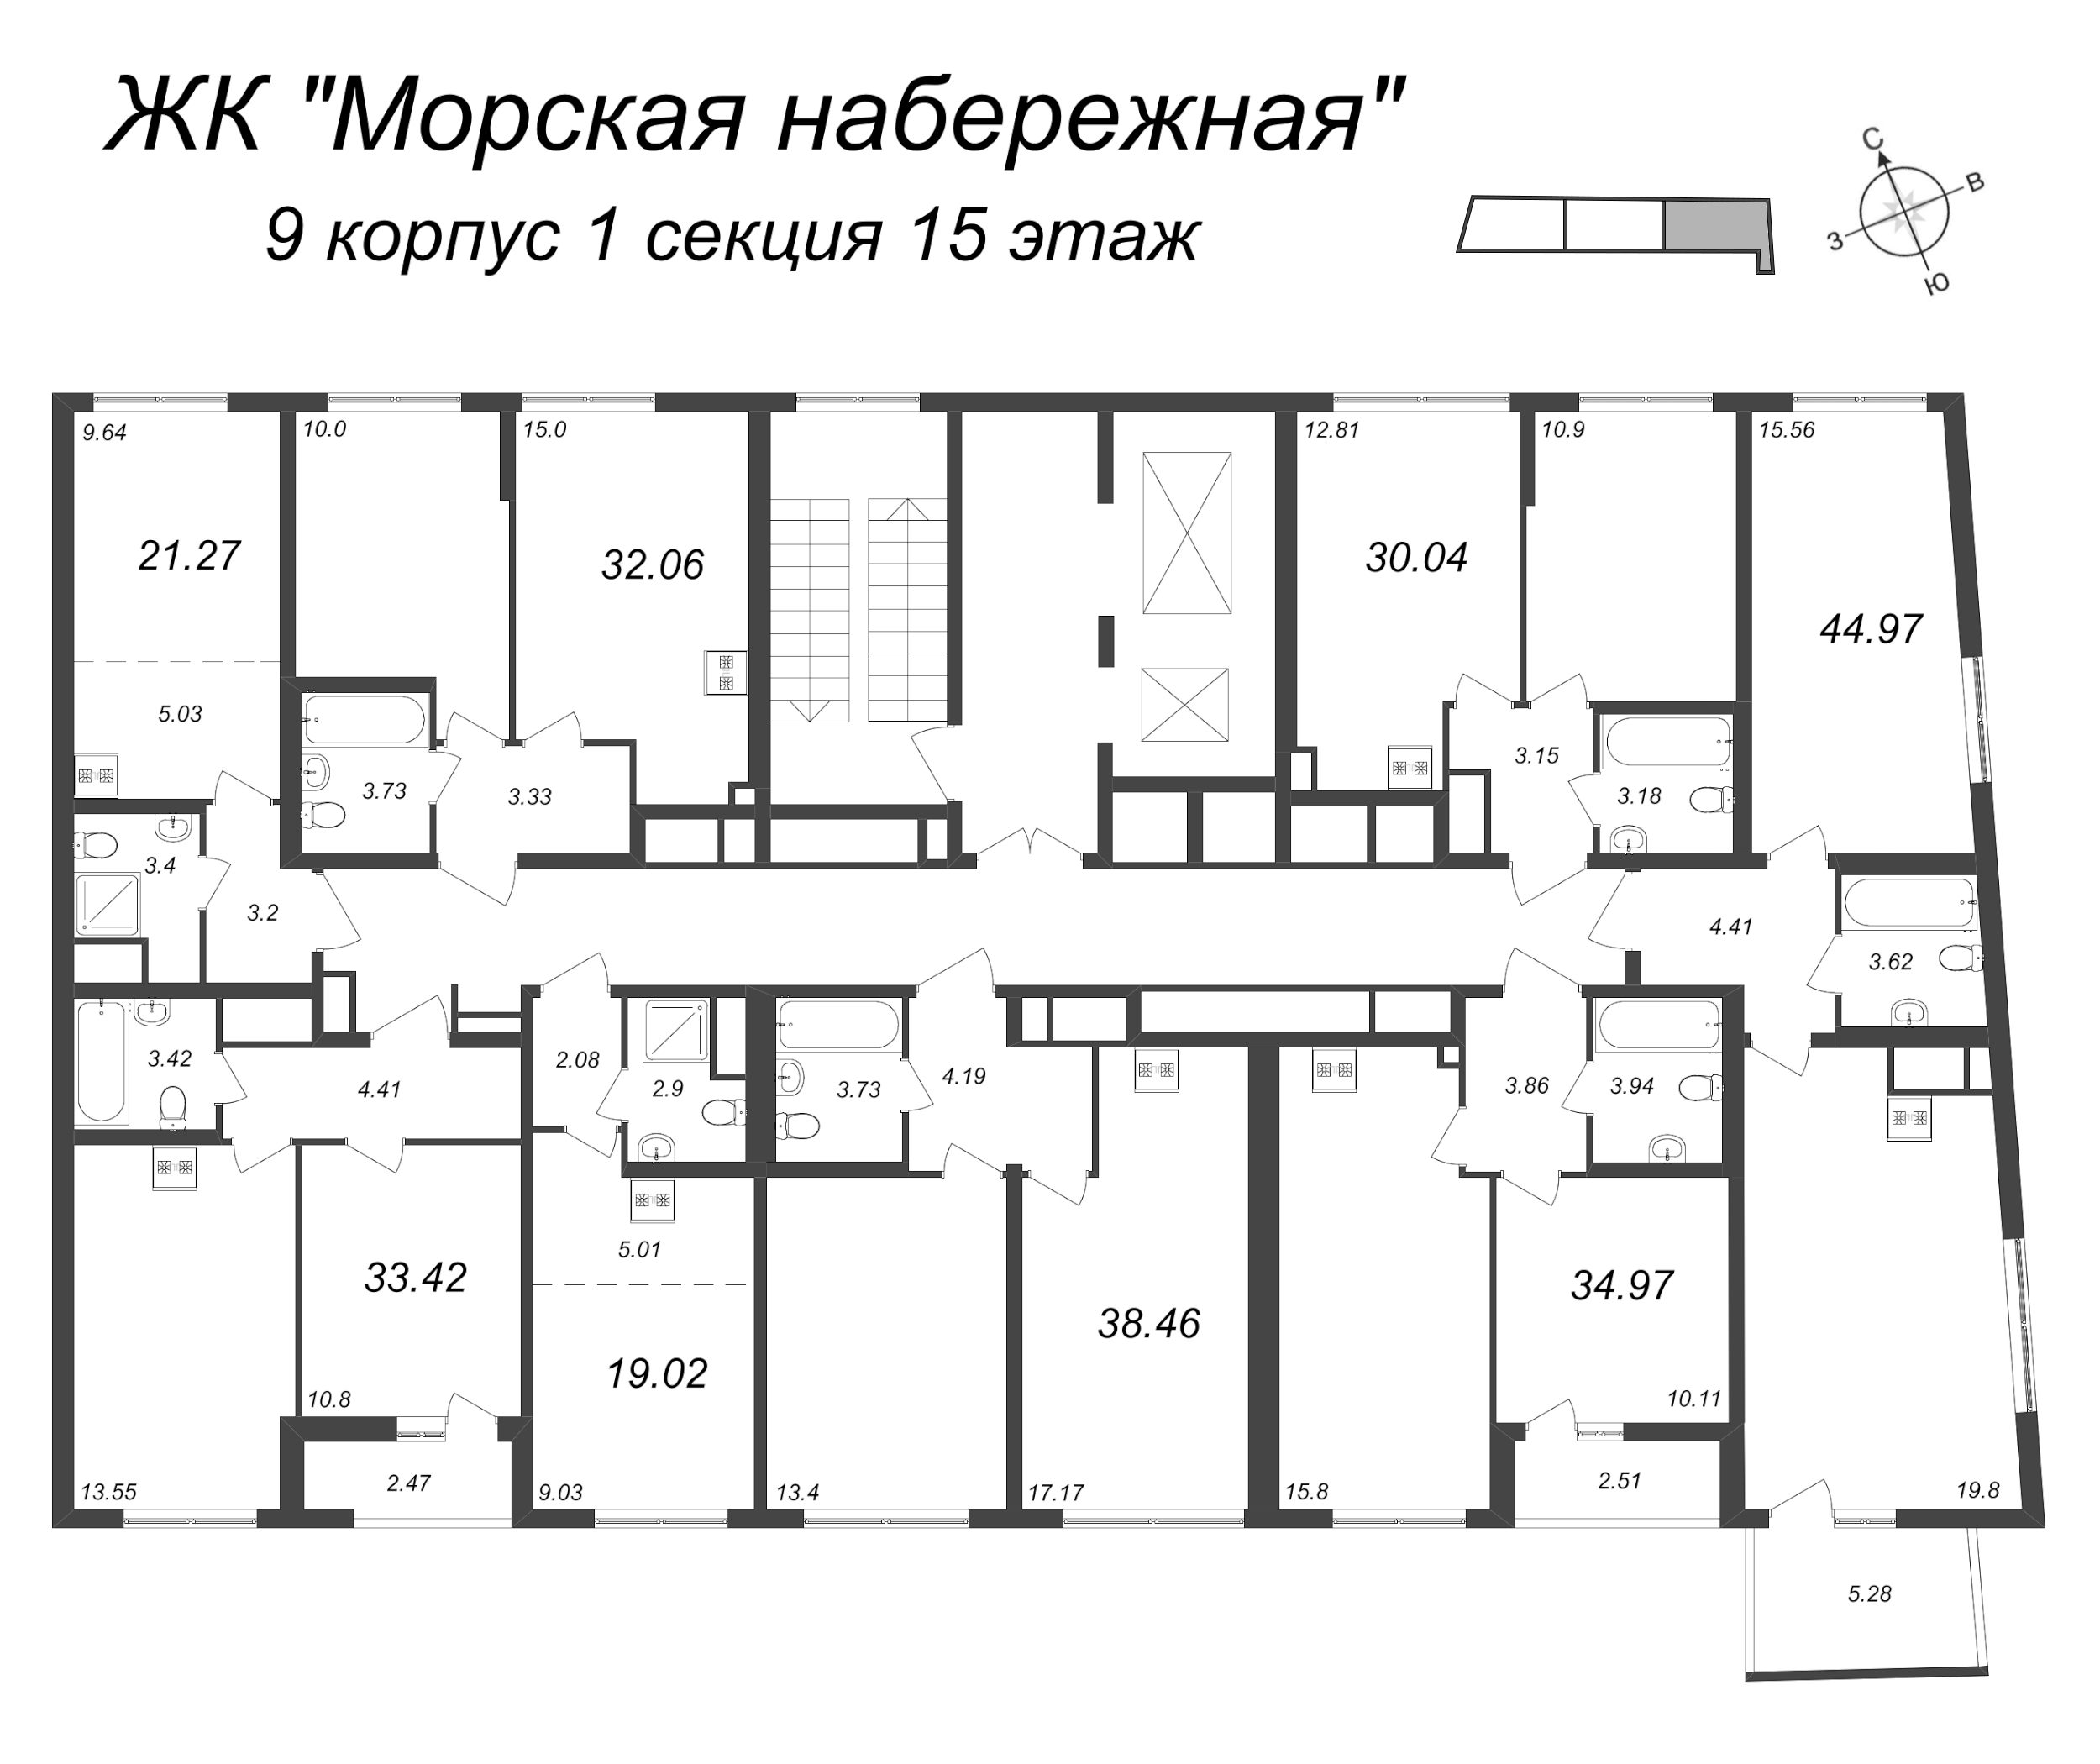 2-комнатная (Евро) квартира, 38.46 м² - планировка этажа